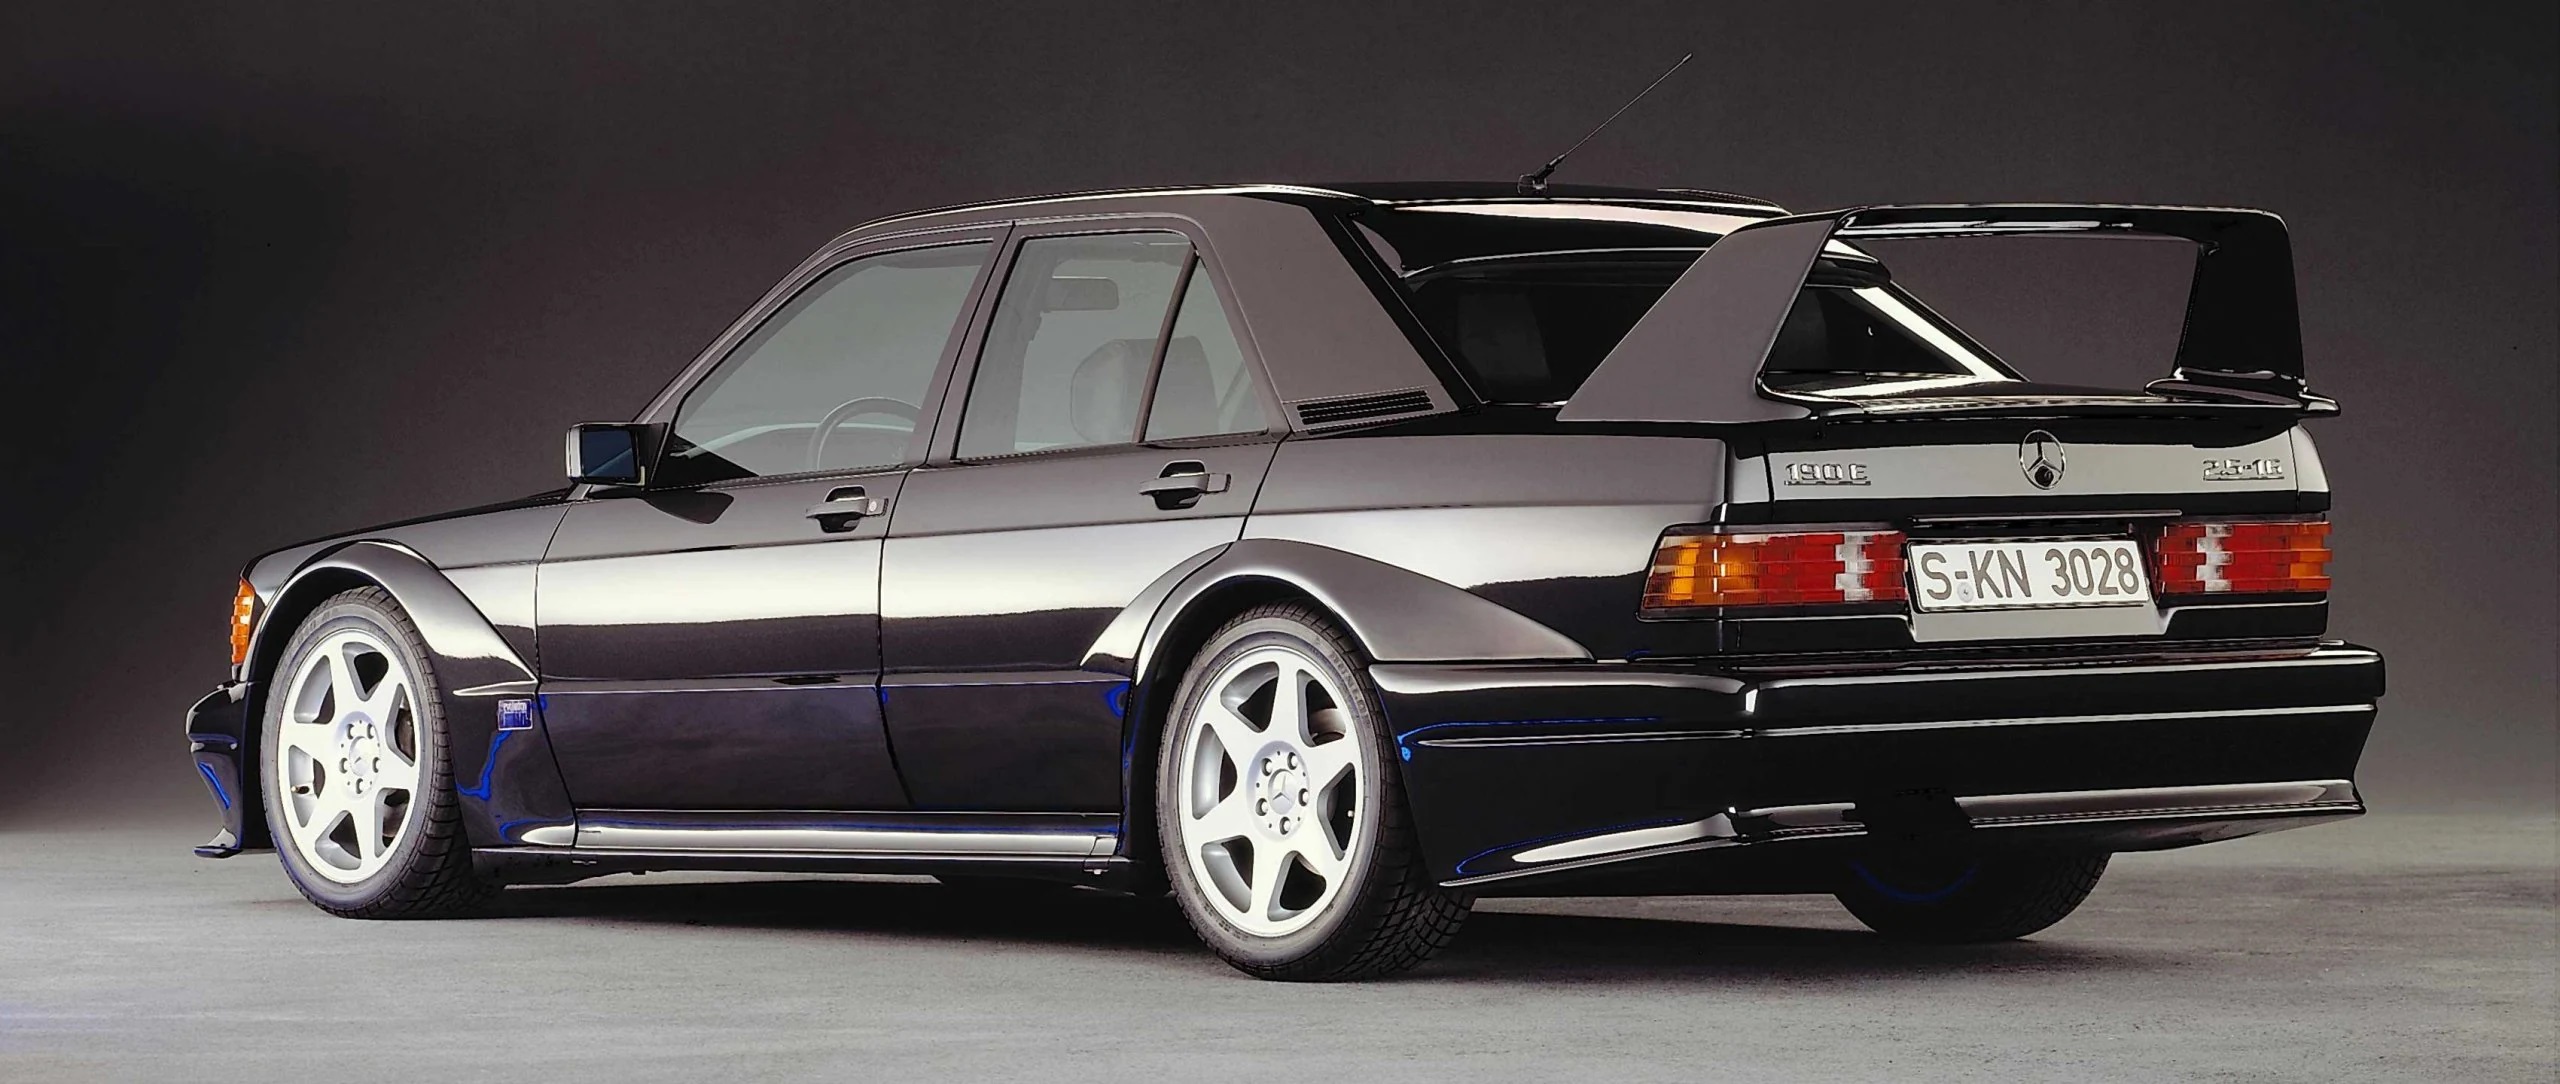 Crimineel erosie Goedkeuring 1990 Mercedes-Benz 190 E 2.5–16 Evo II Finds a New Owner for $432,432 -  autoevolution